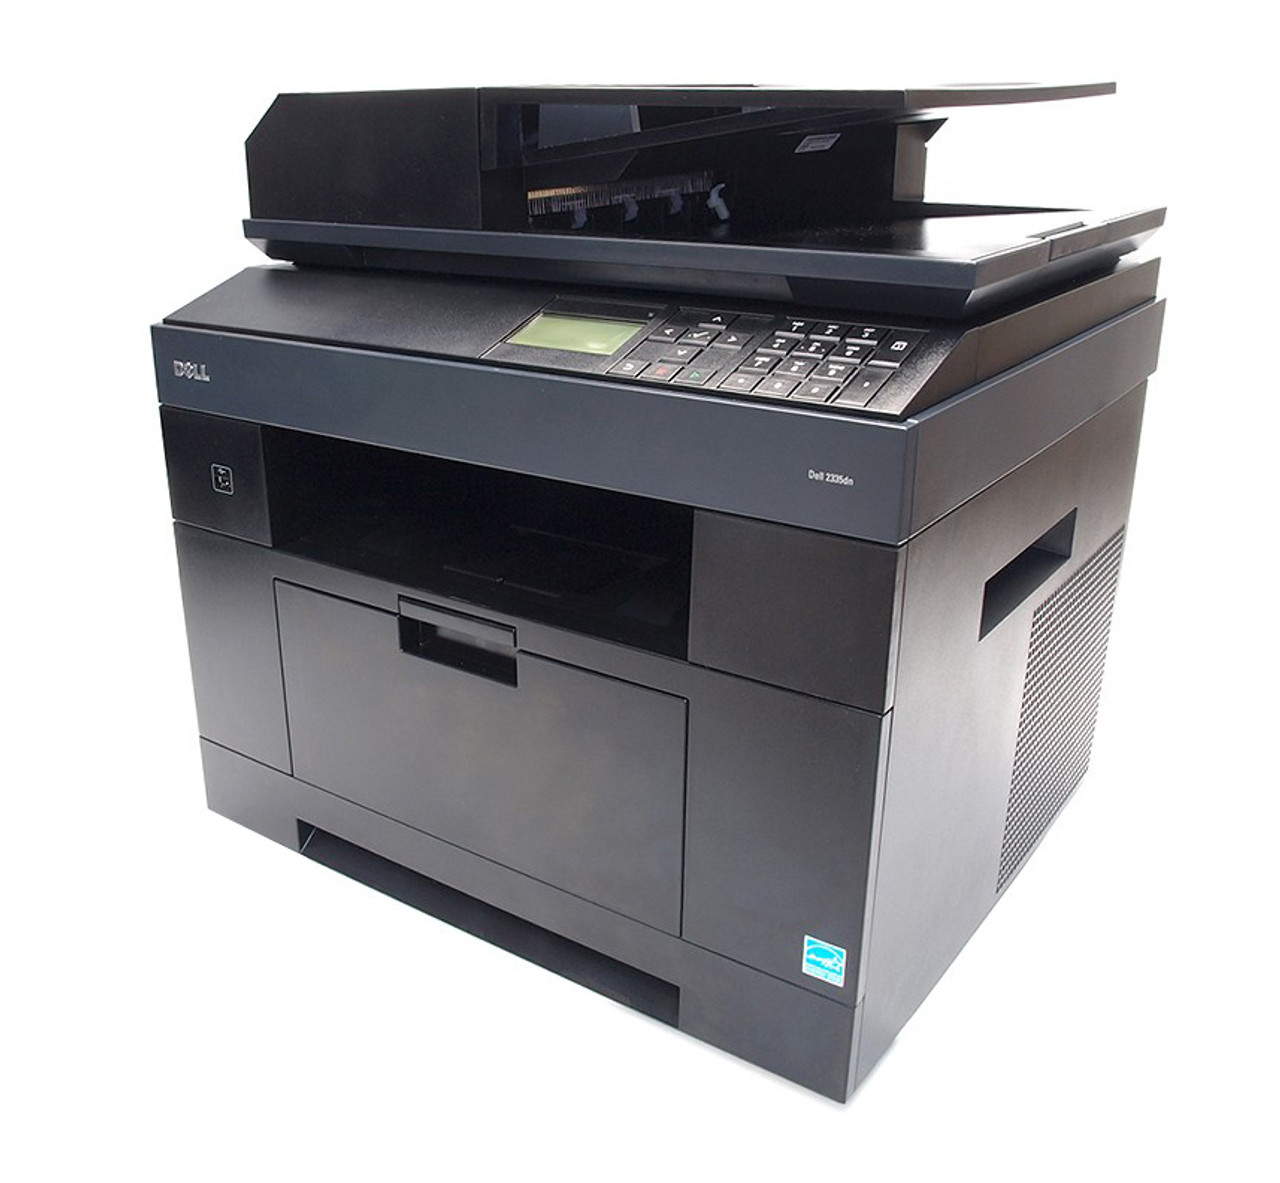 2335dn Multifunctional Laser Printer